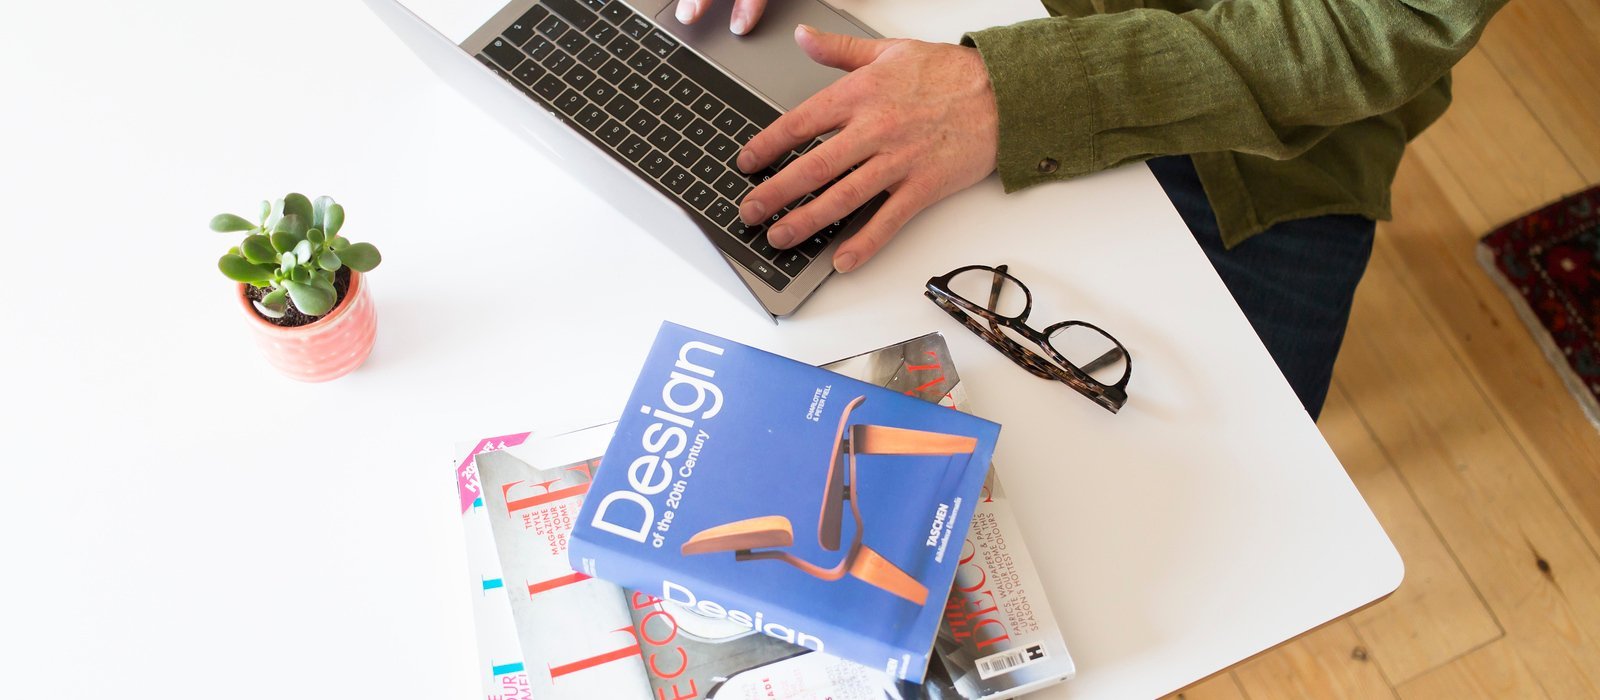 Interior Design online student working on laptop 